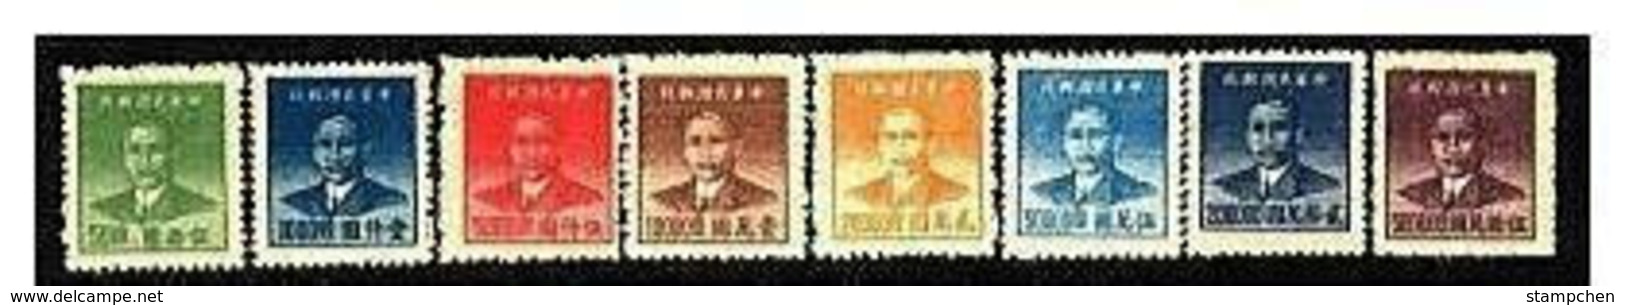 Rep China 1949 Sun Yat-sen Gold Yuan Hwa Nan Print Stamps D62 SYS - Ungebraucht